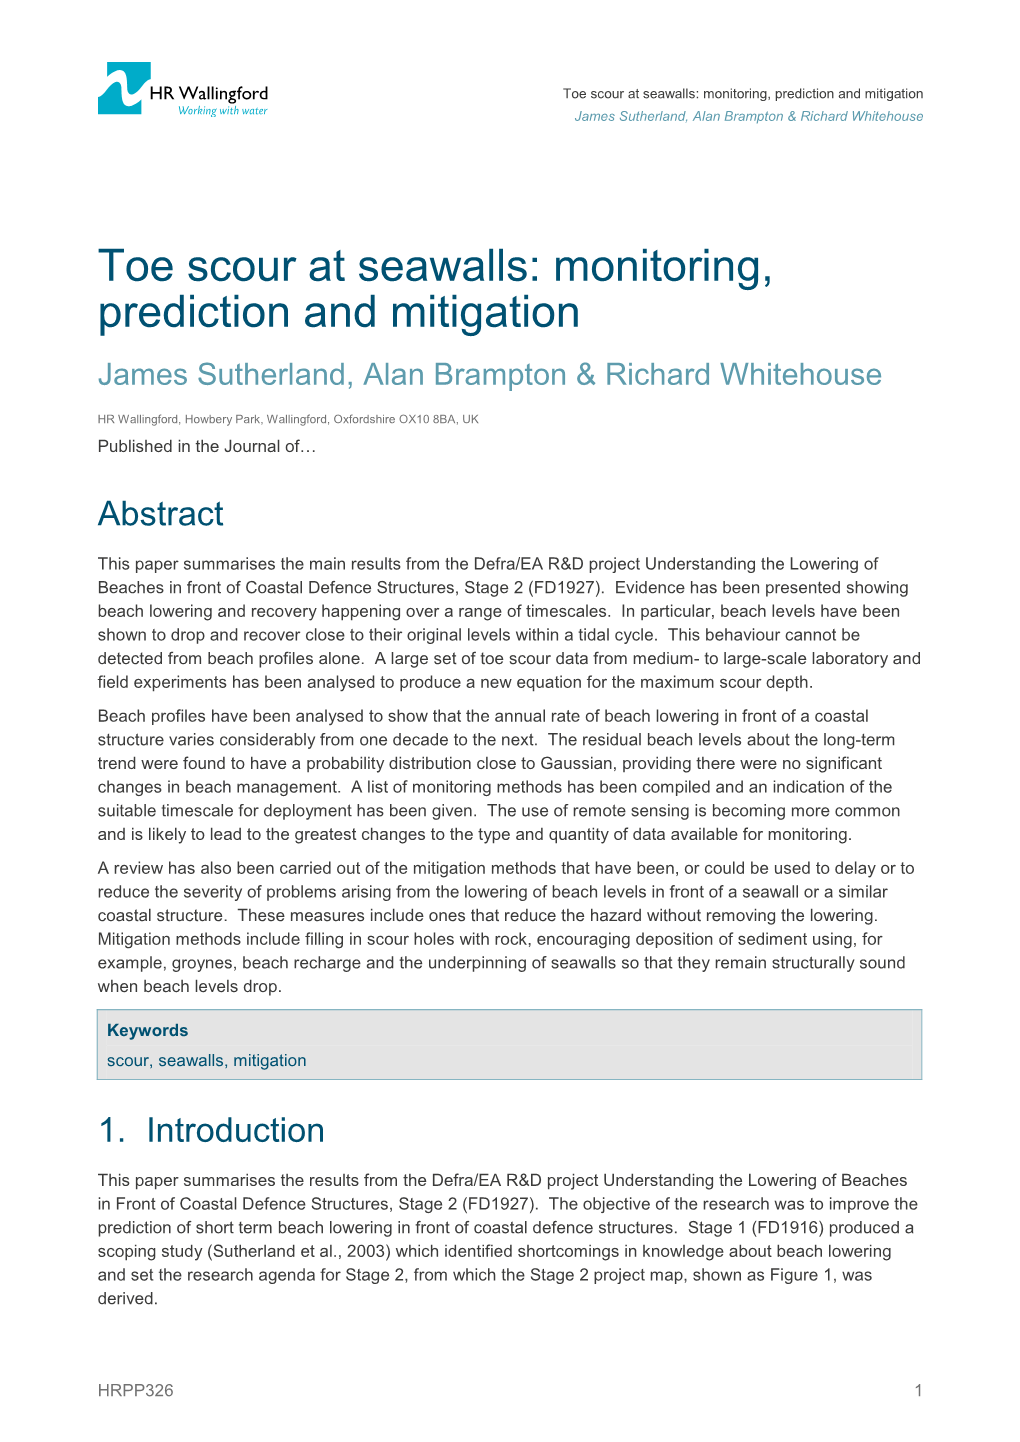 Toe Scour at Seawalls: Monitoring, Prediction and Mitigation James Sutherland, Alan Brampton & Richard Whitehouse